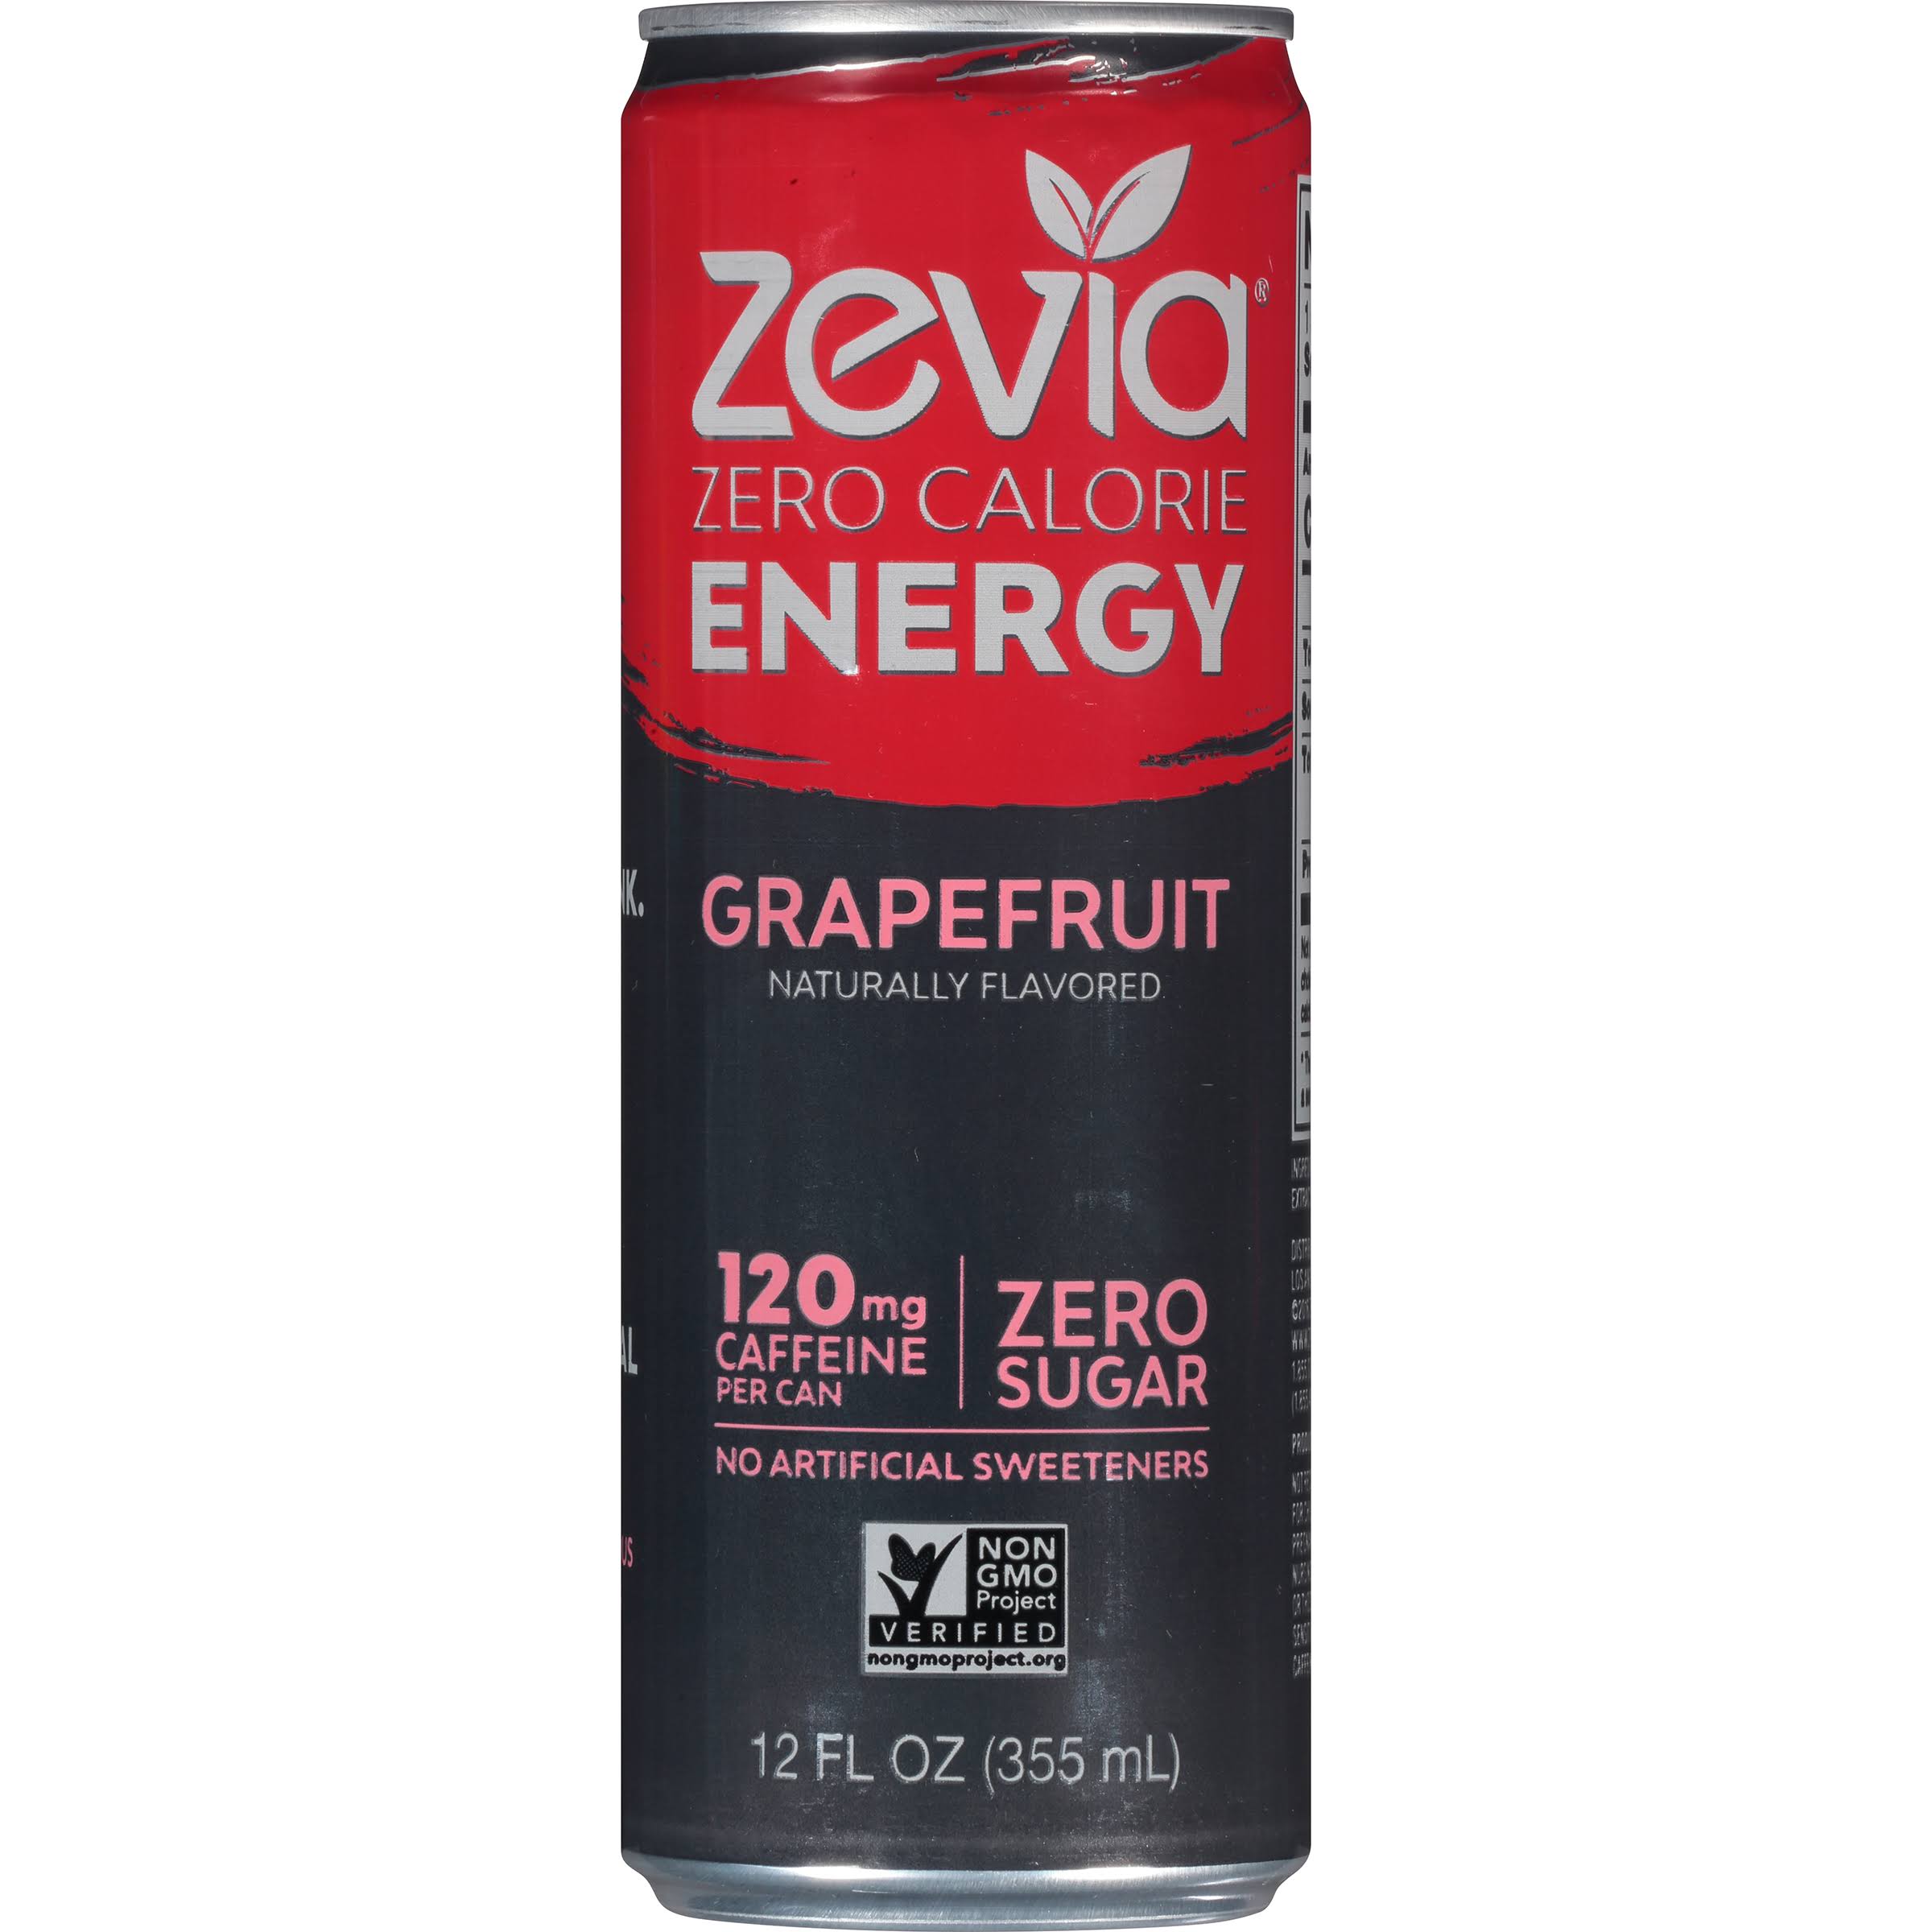 Zevia Zero Calorie Energy Drink - Grapefruit - Case of 12 - 12 FL oz